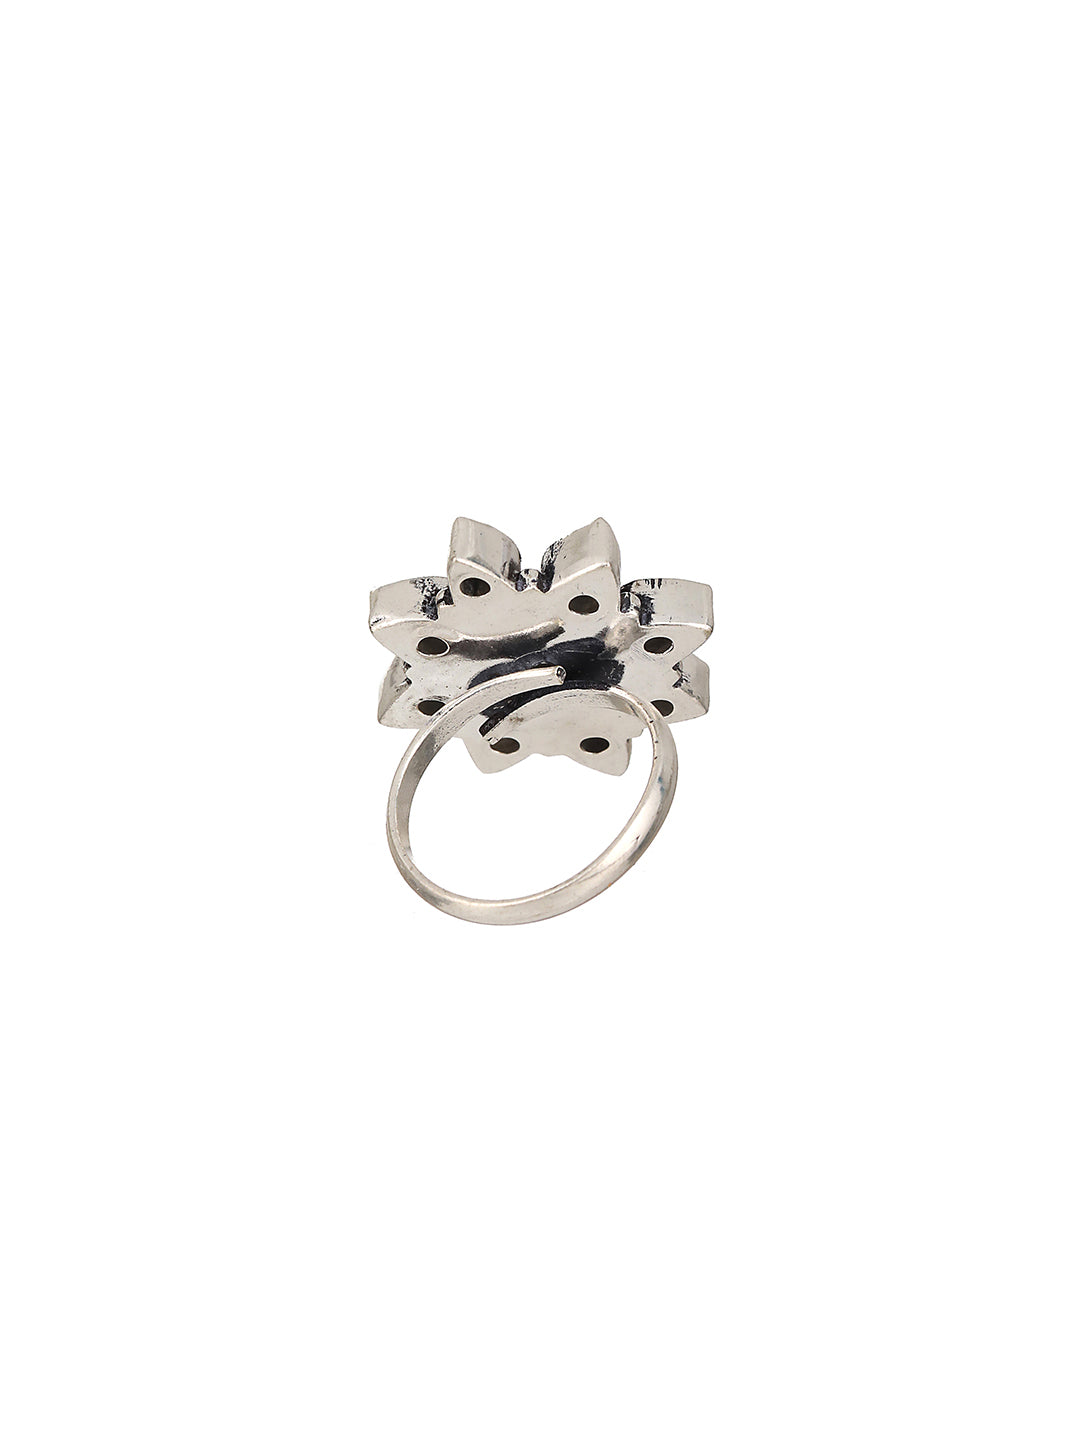 Silver Oxidised  White Stones Studded Adjustable Finger Ring